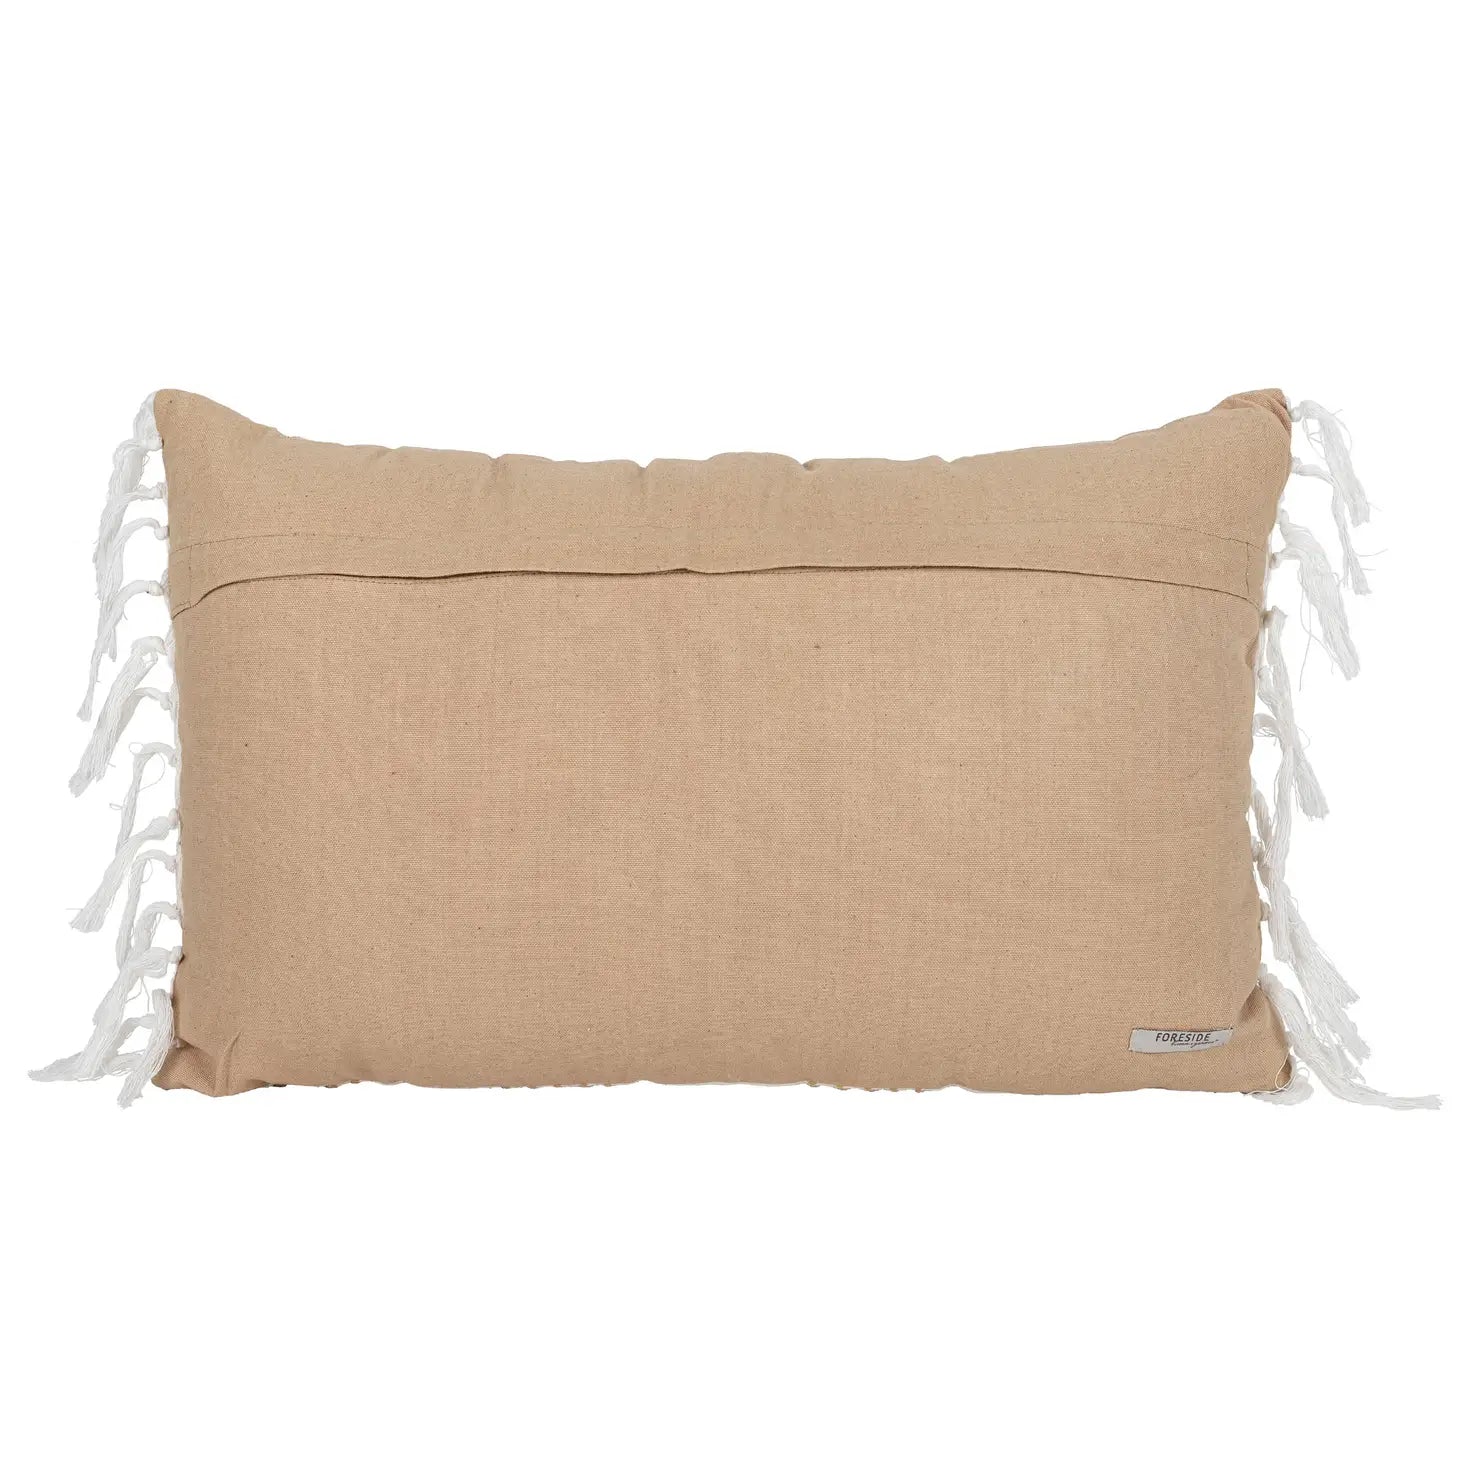 Woven Lumbar Stripe Pillow